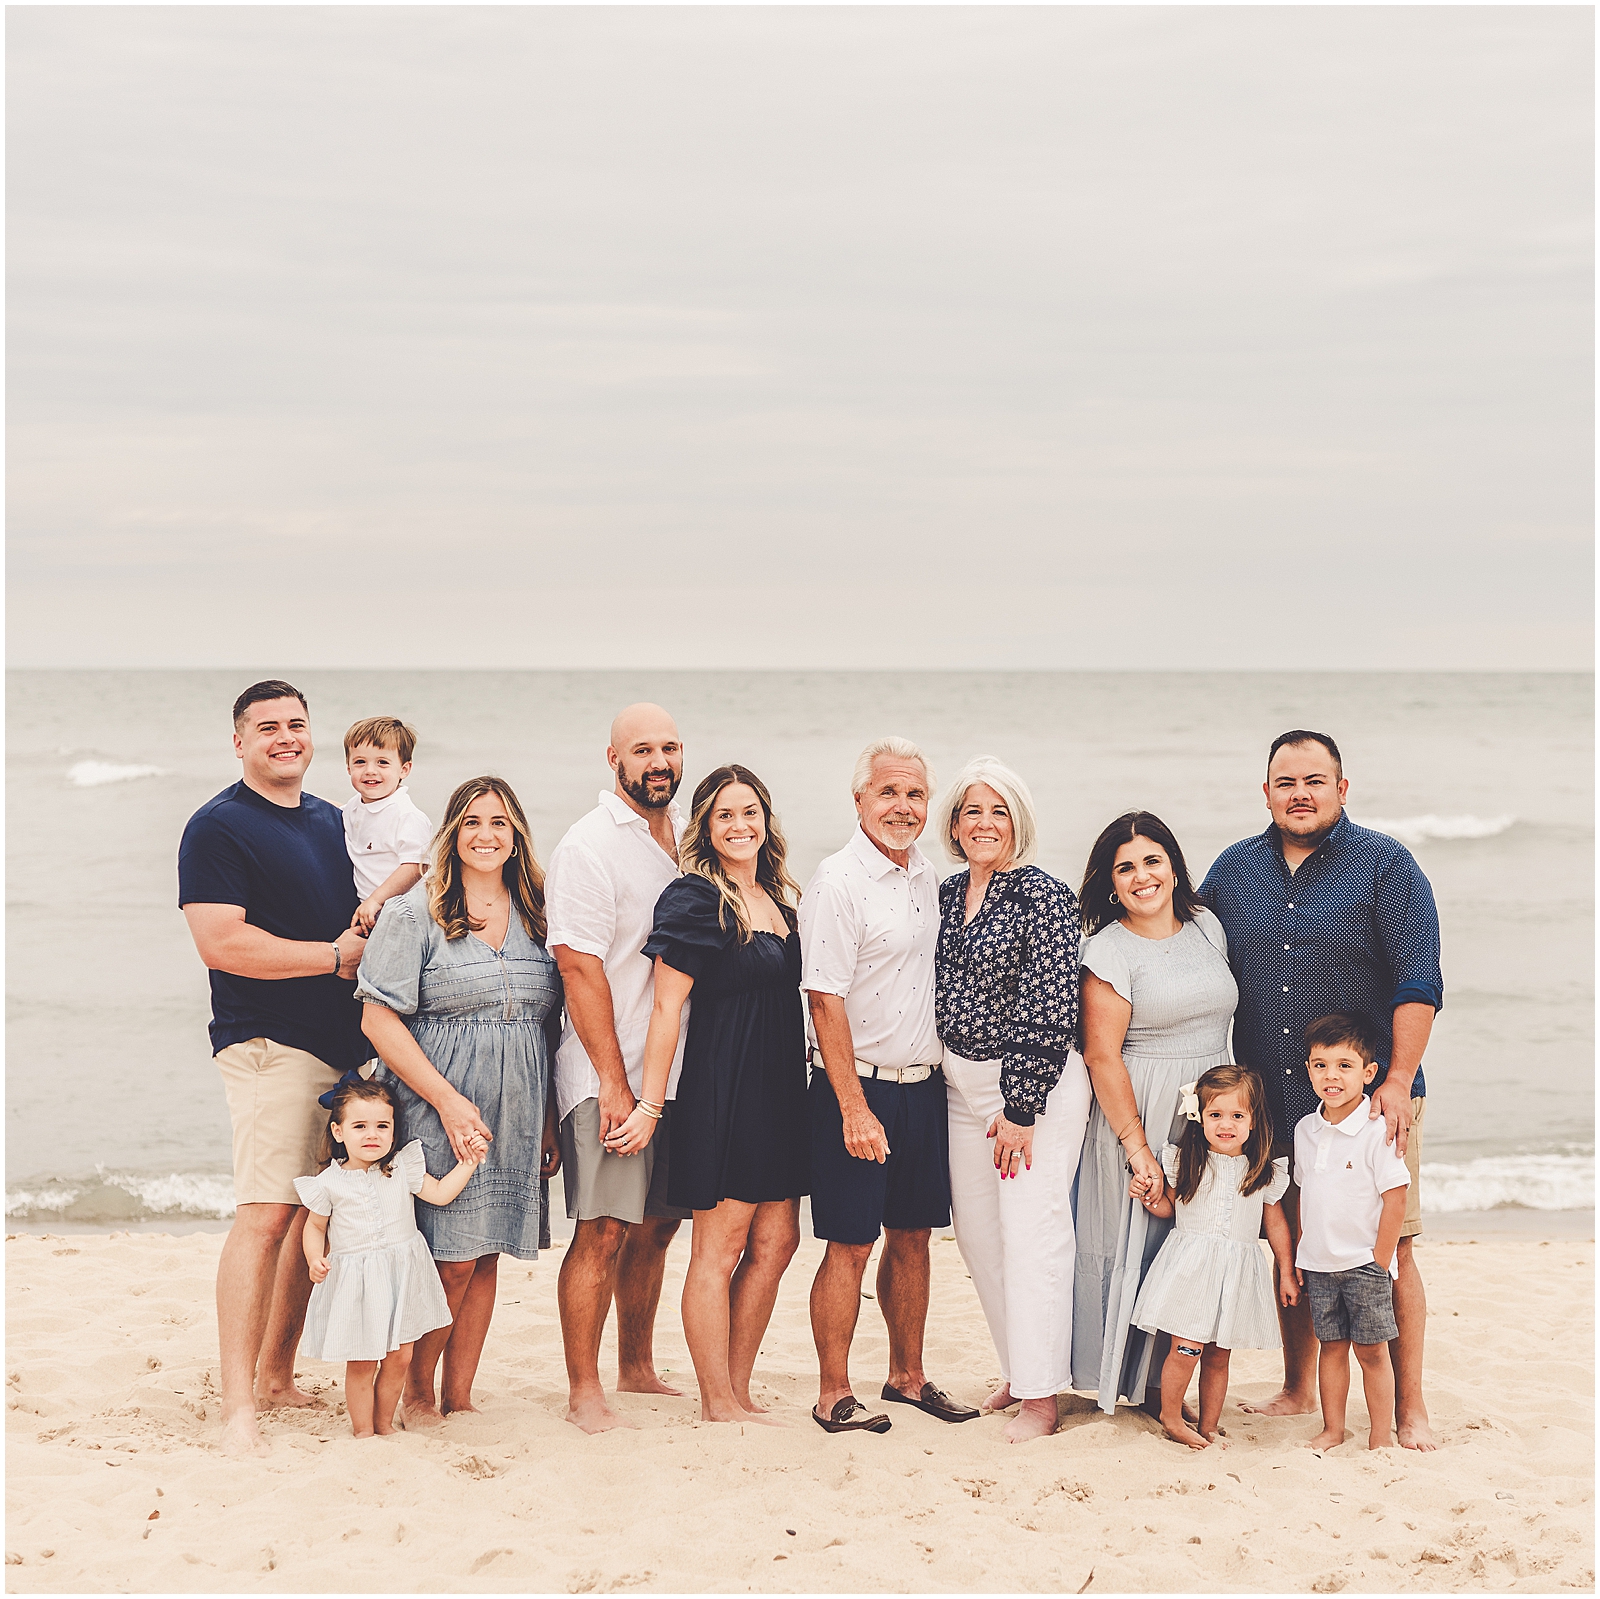 Kara Evans Photographer's top blog posts of 2023 with the Trump family beach photos in Michigan City, Indiana.